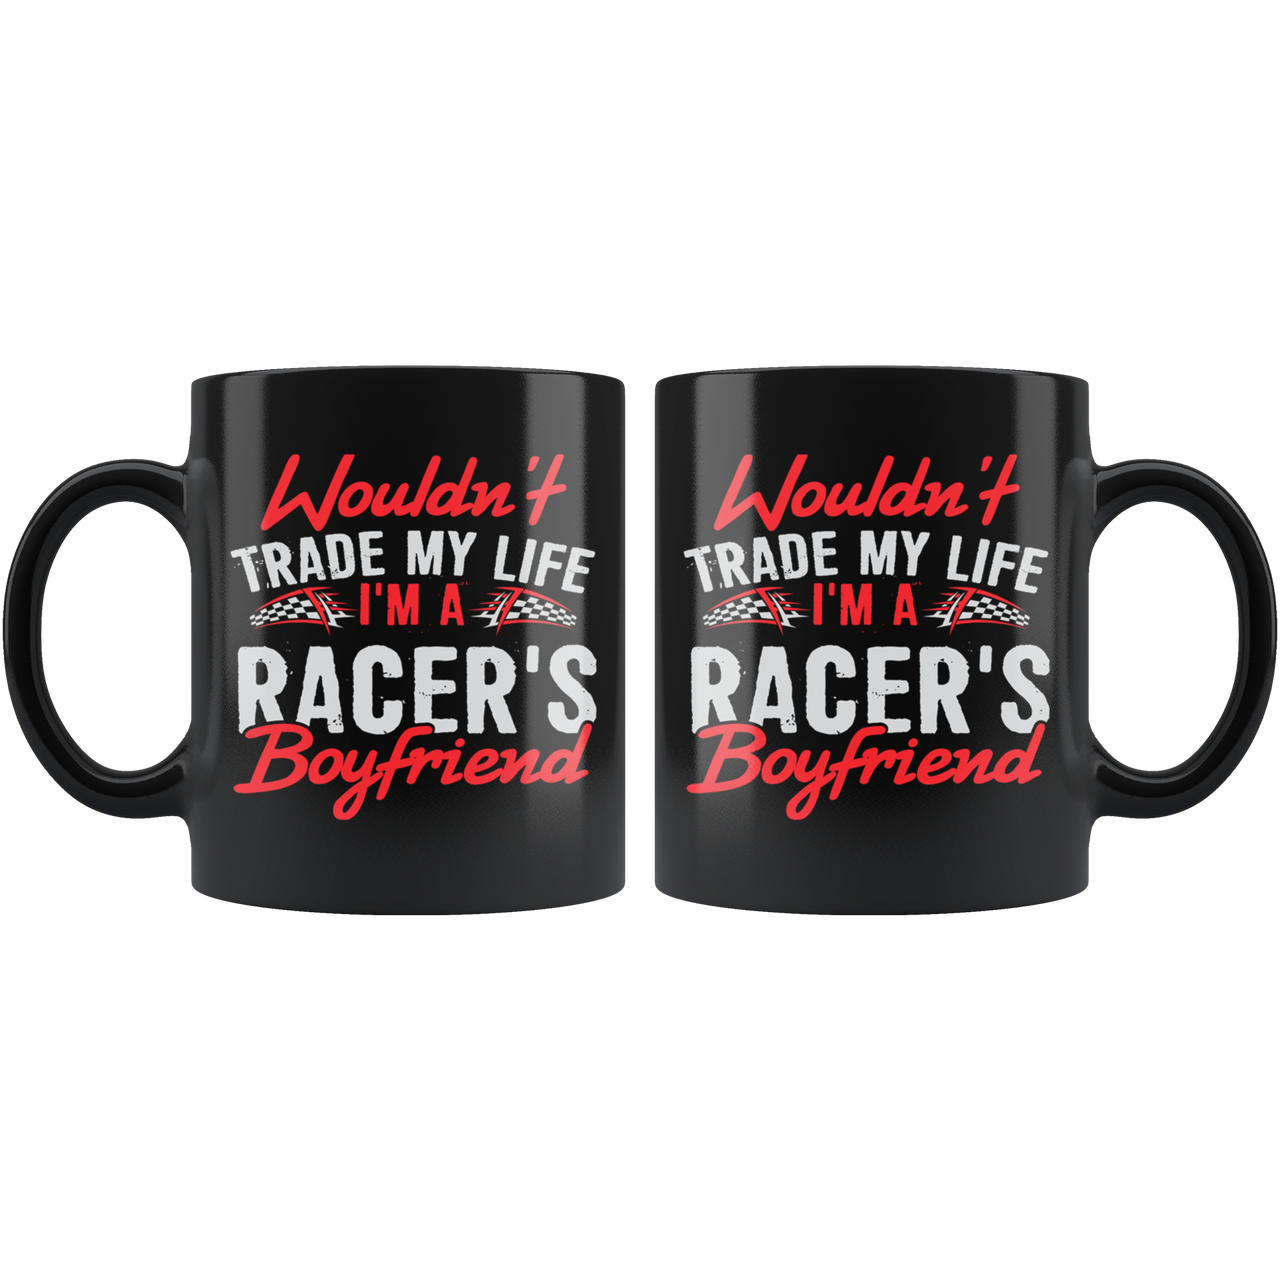 Wouldn't Trade My Life I'm A Racer's Boyfriend Mug!